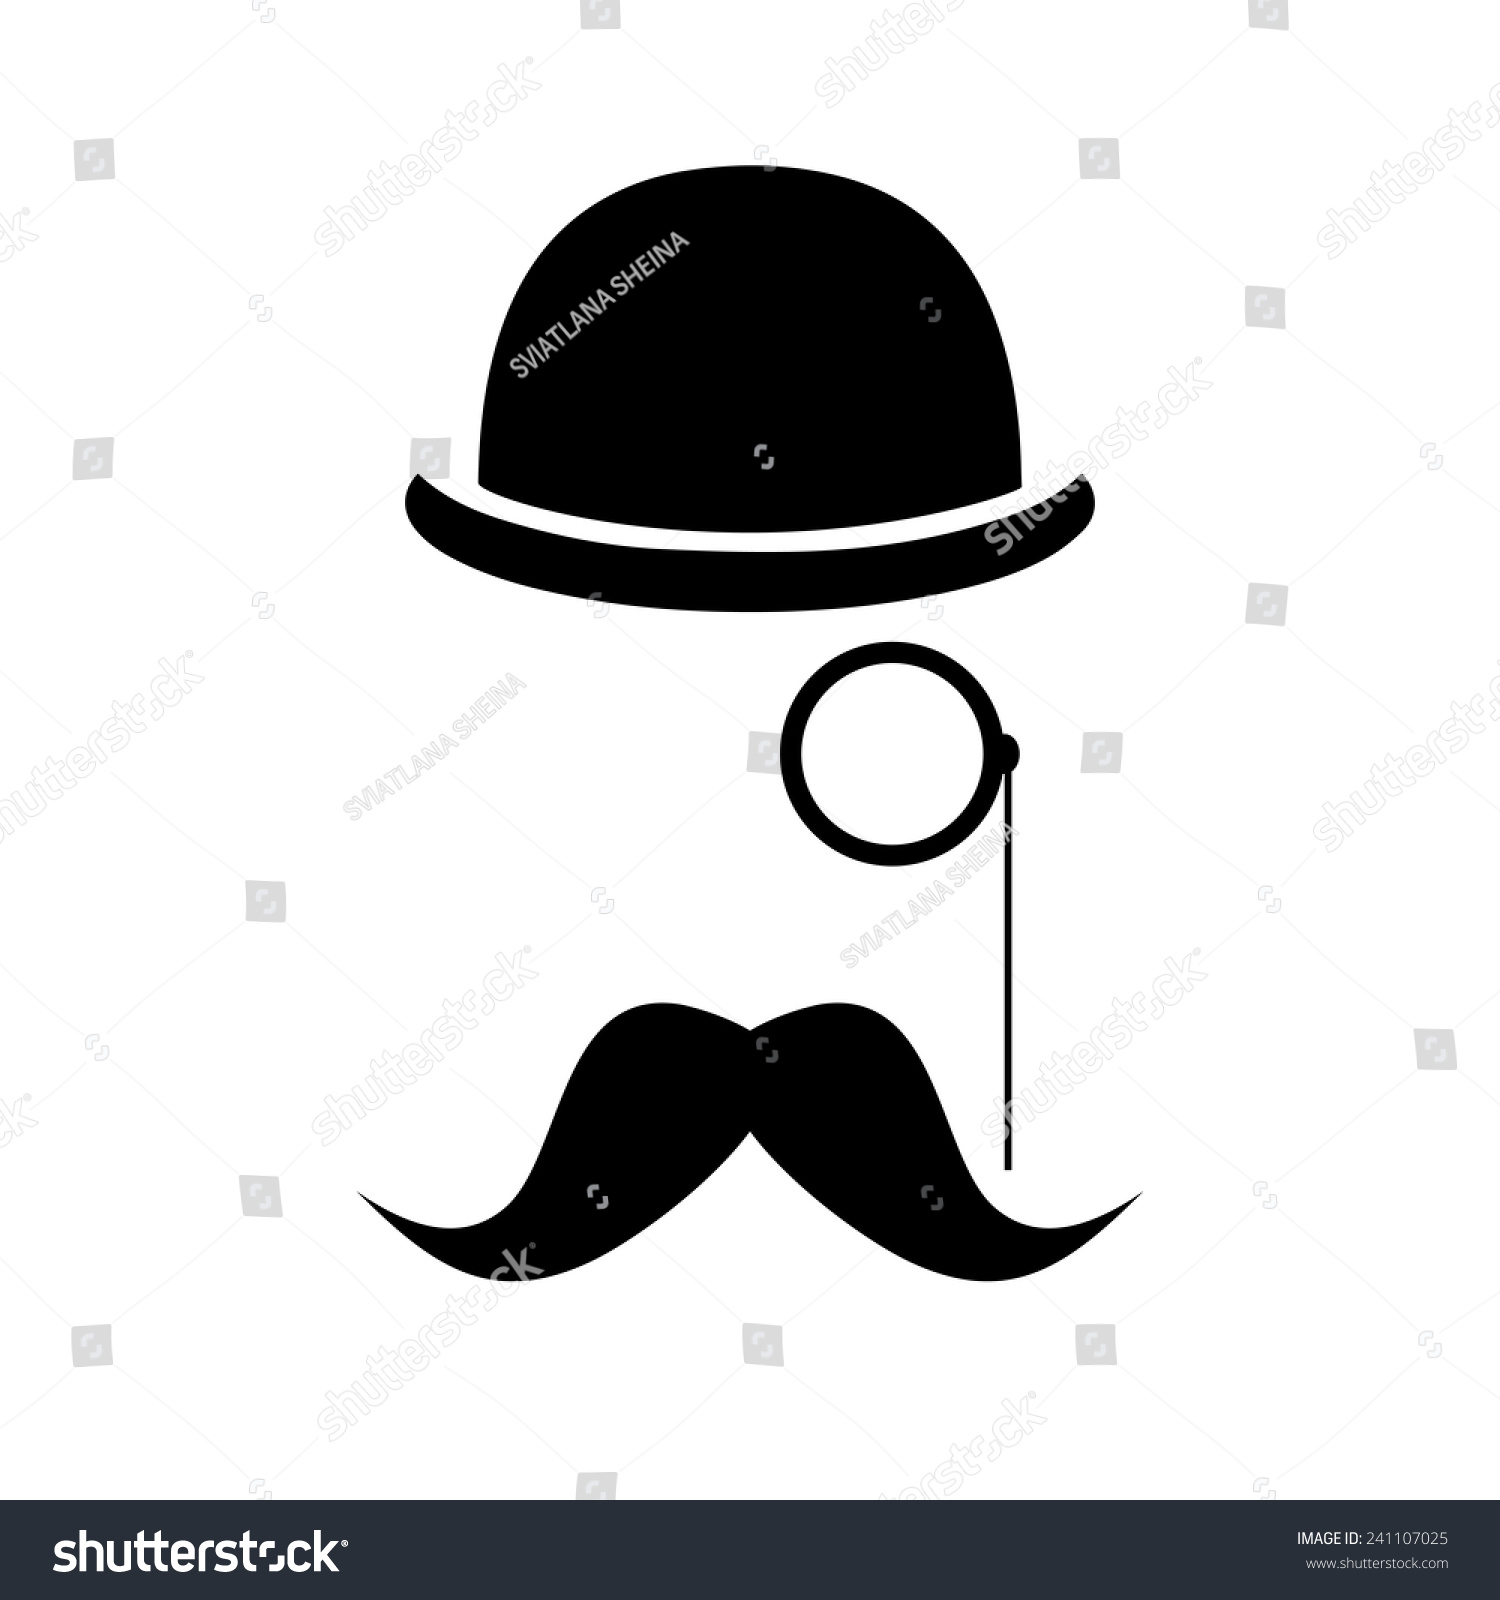 moustache and hat clipart - photo #31